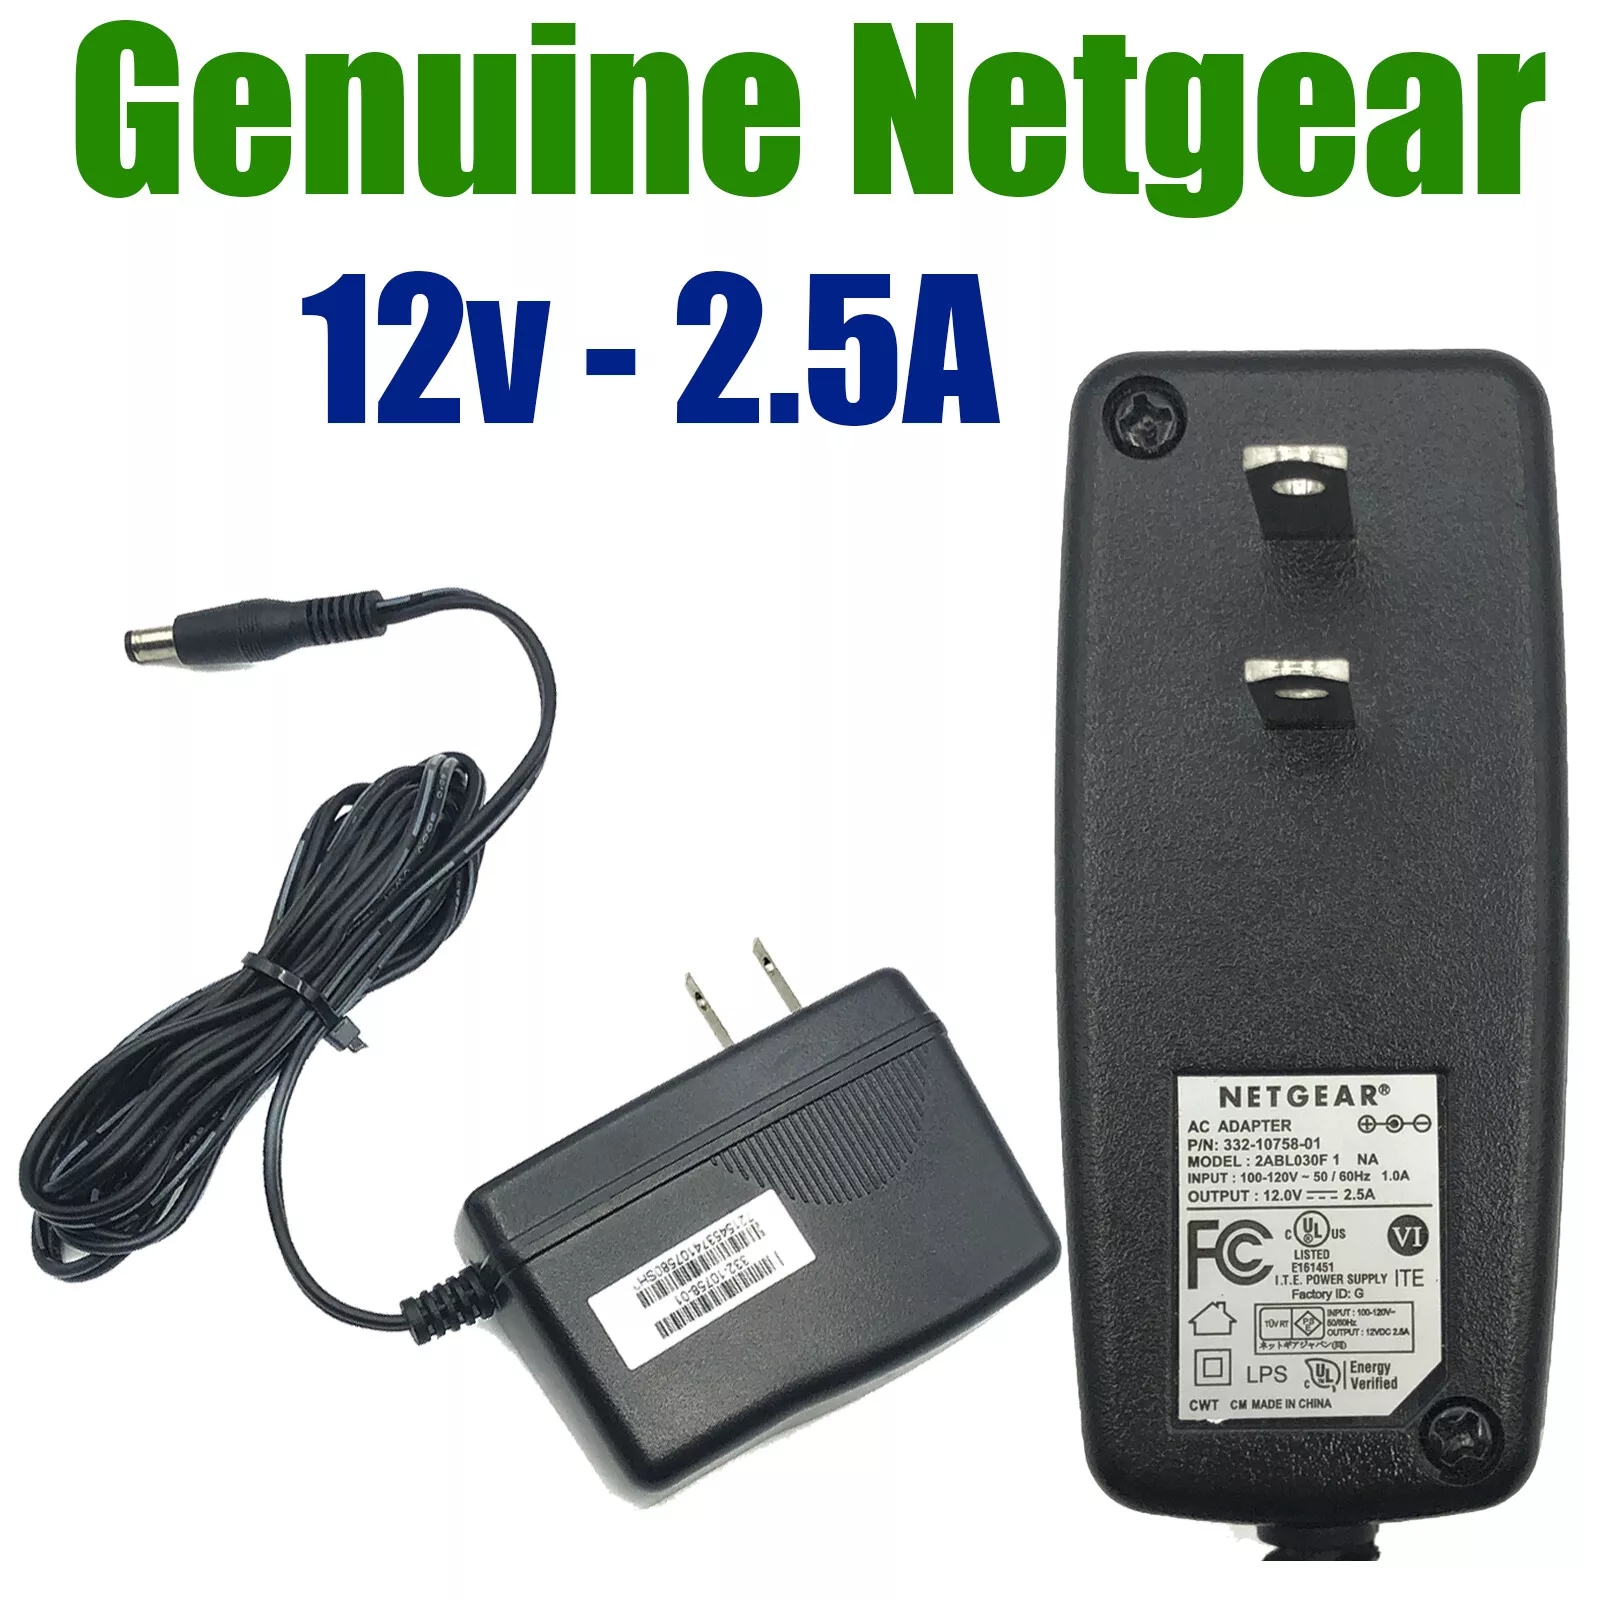 *Brand NEW*Genuine Netgear 12v 2.5A 30W AC Power Adapter for Orbi WiFi AX4200 Tri-Band RBS750 RBR750 Power Sup